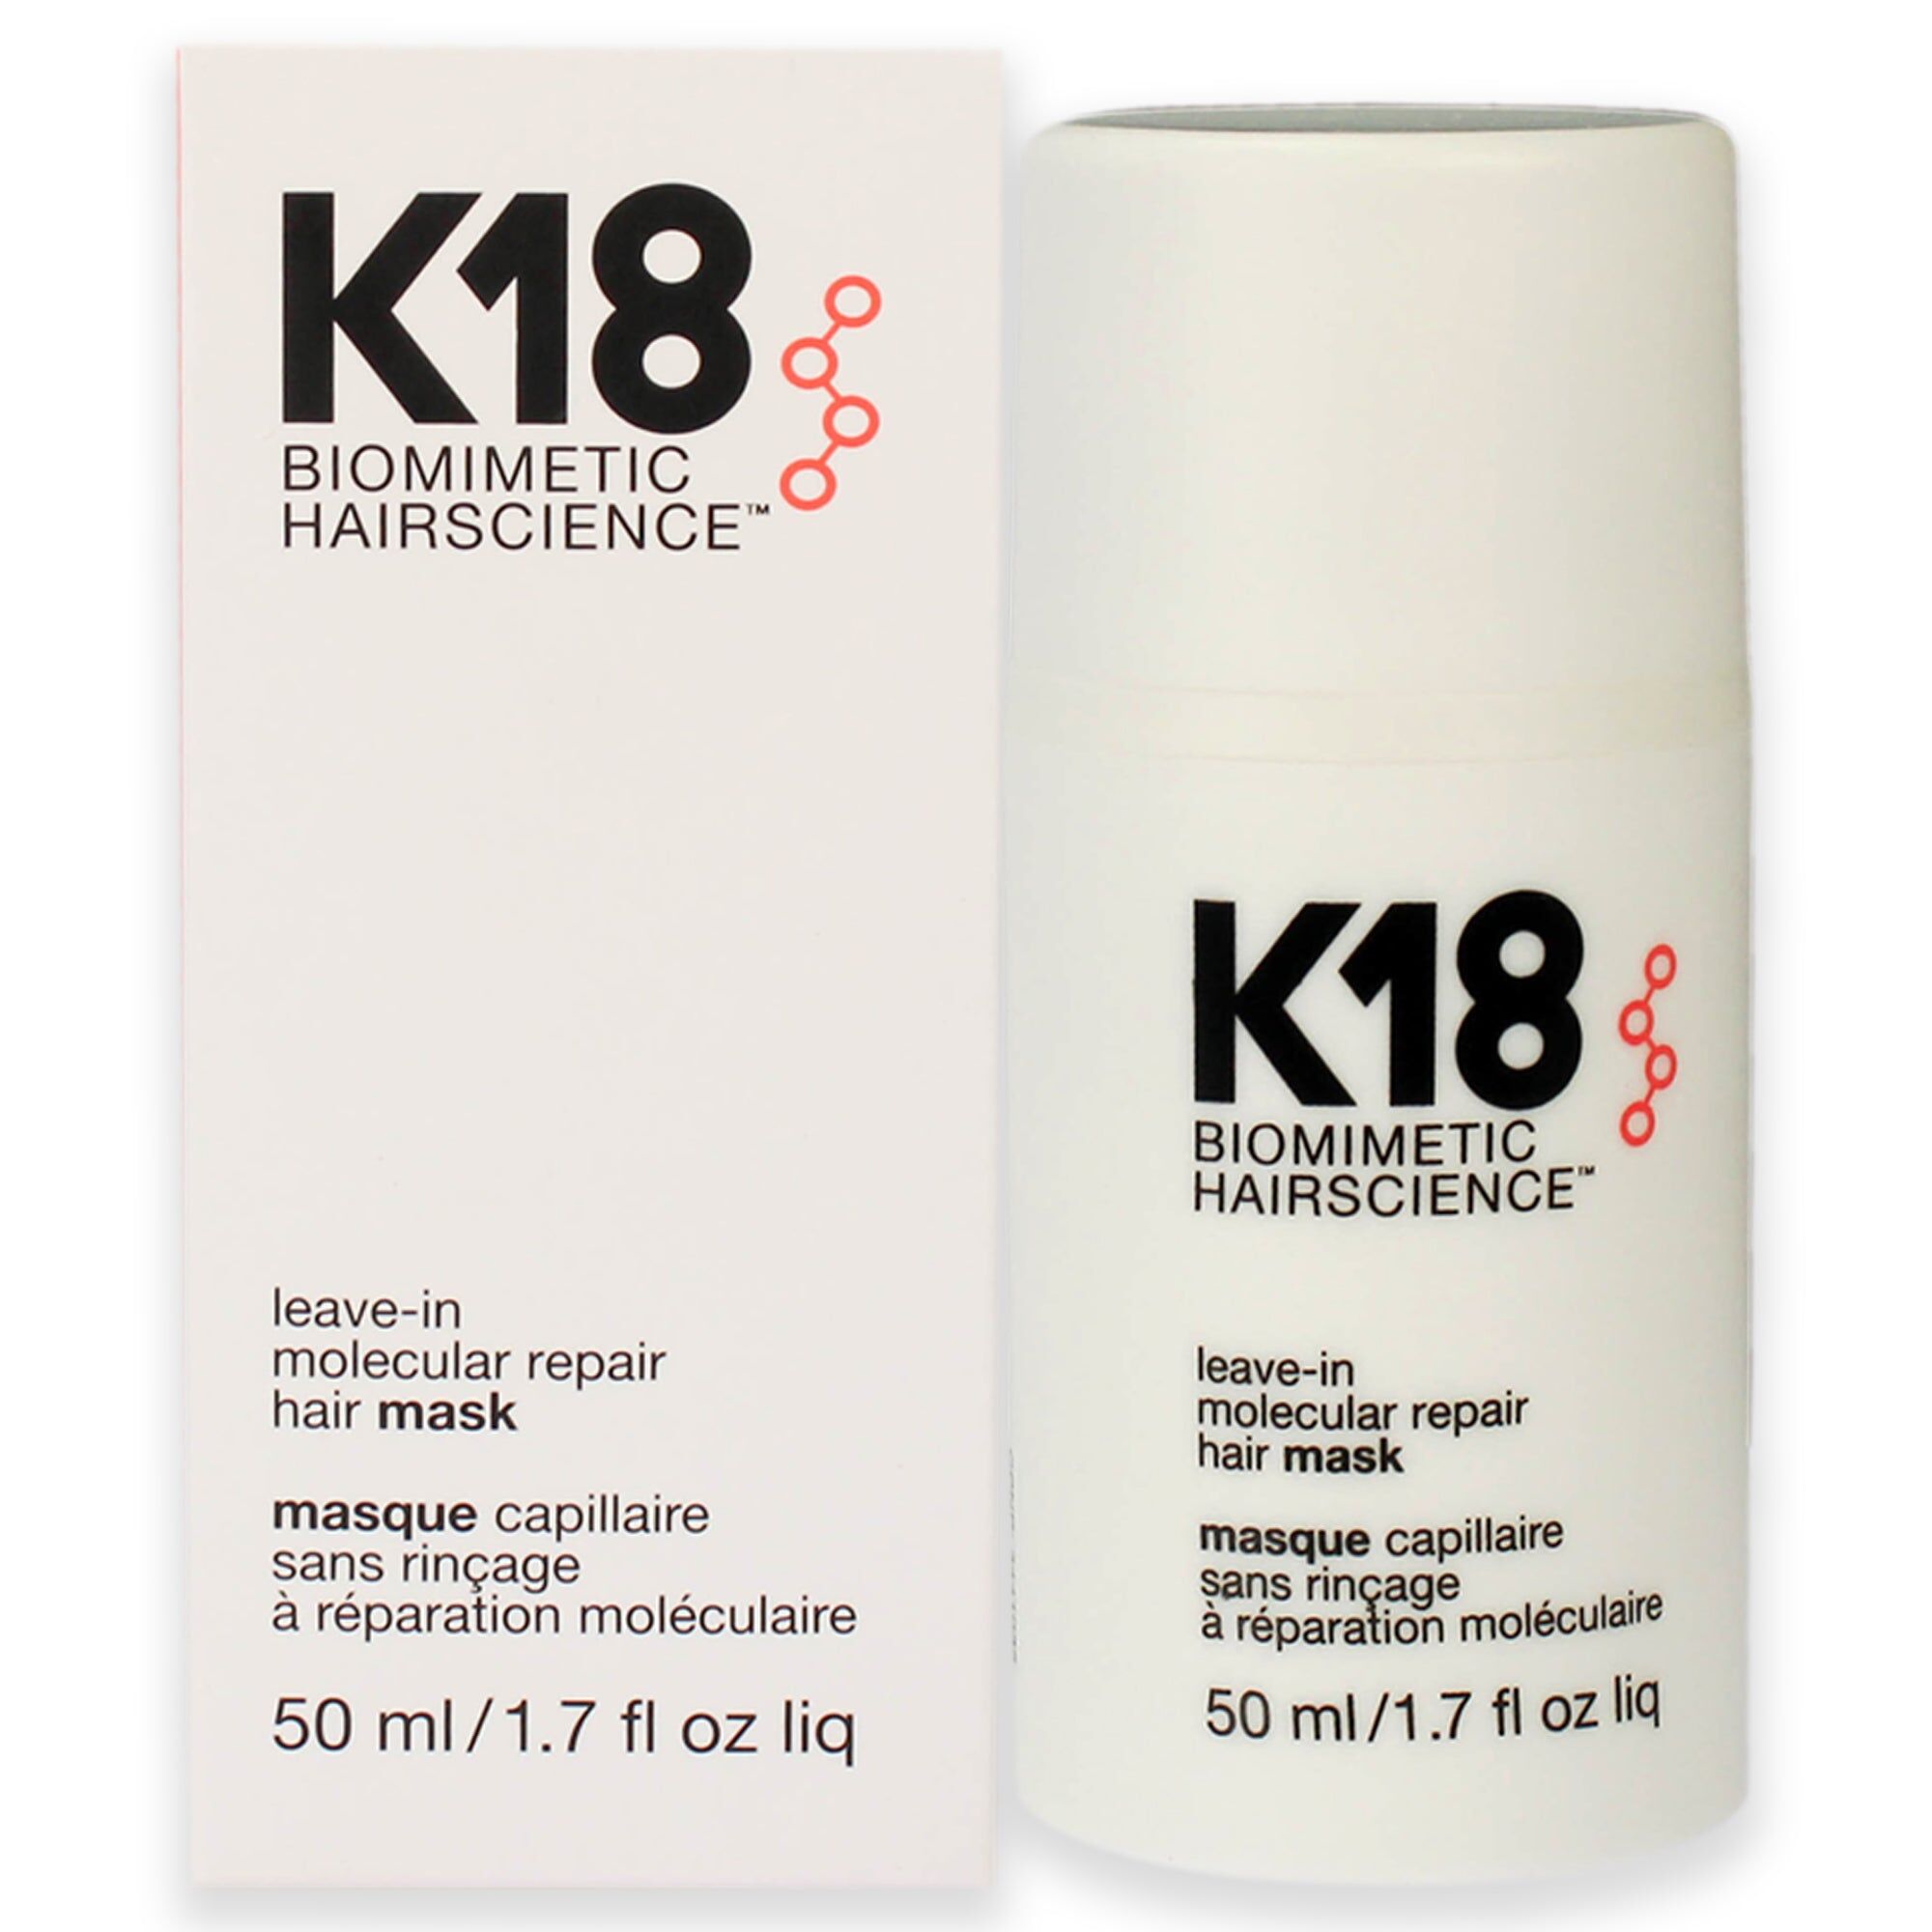 Leave-In Molecular Repair Hair Mask by K18 Hair for Unisex - 1.7 oz Masque 1.7 oz unisex